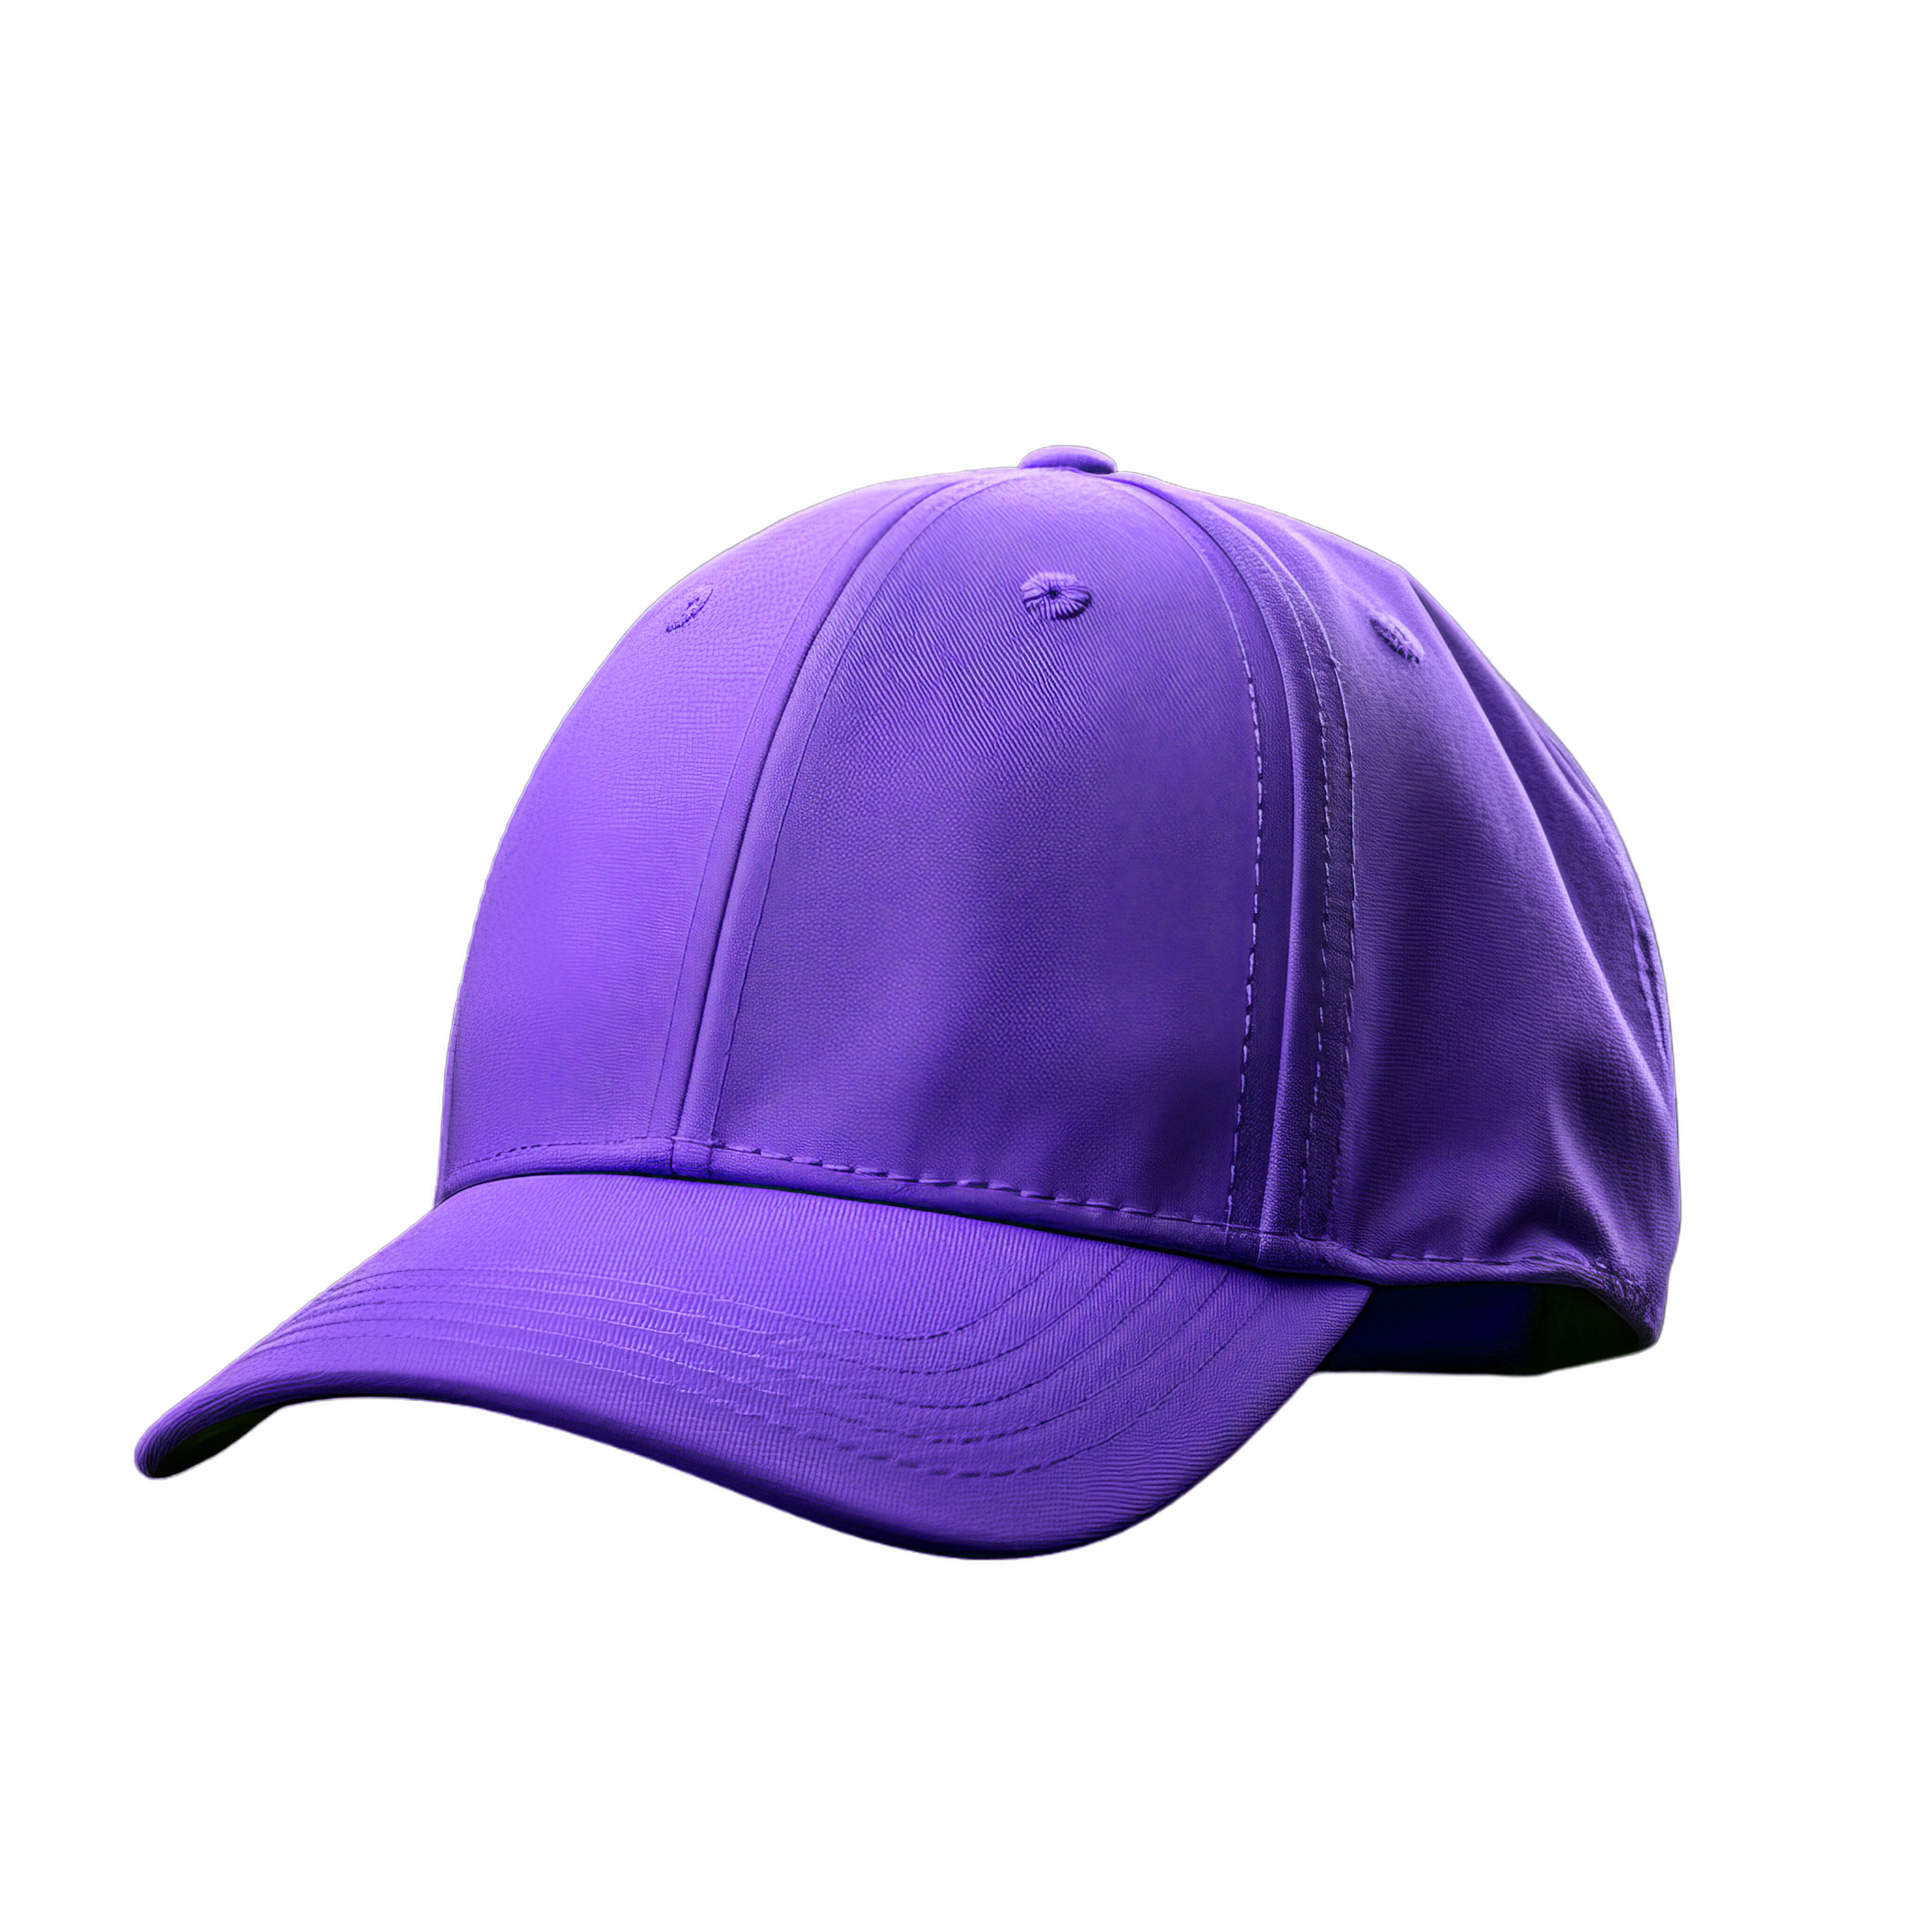 https://static.vecteezy.com/system/resources/previews/027/941/762/original/purple-cap-sports-hat-baseball-caps-png.png